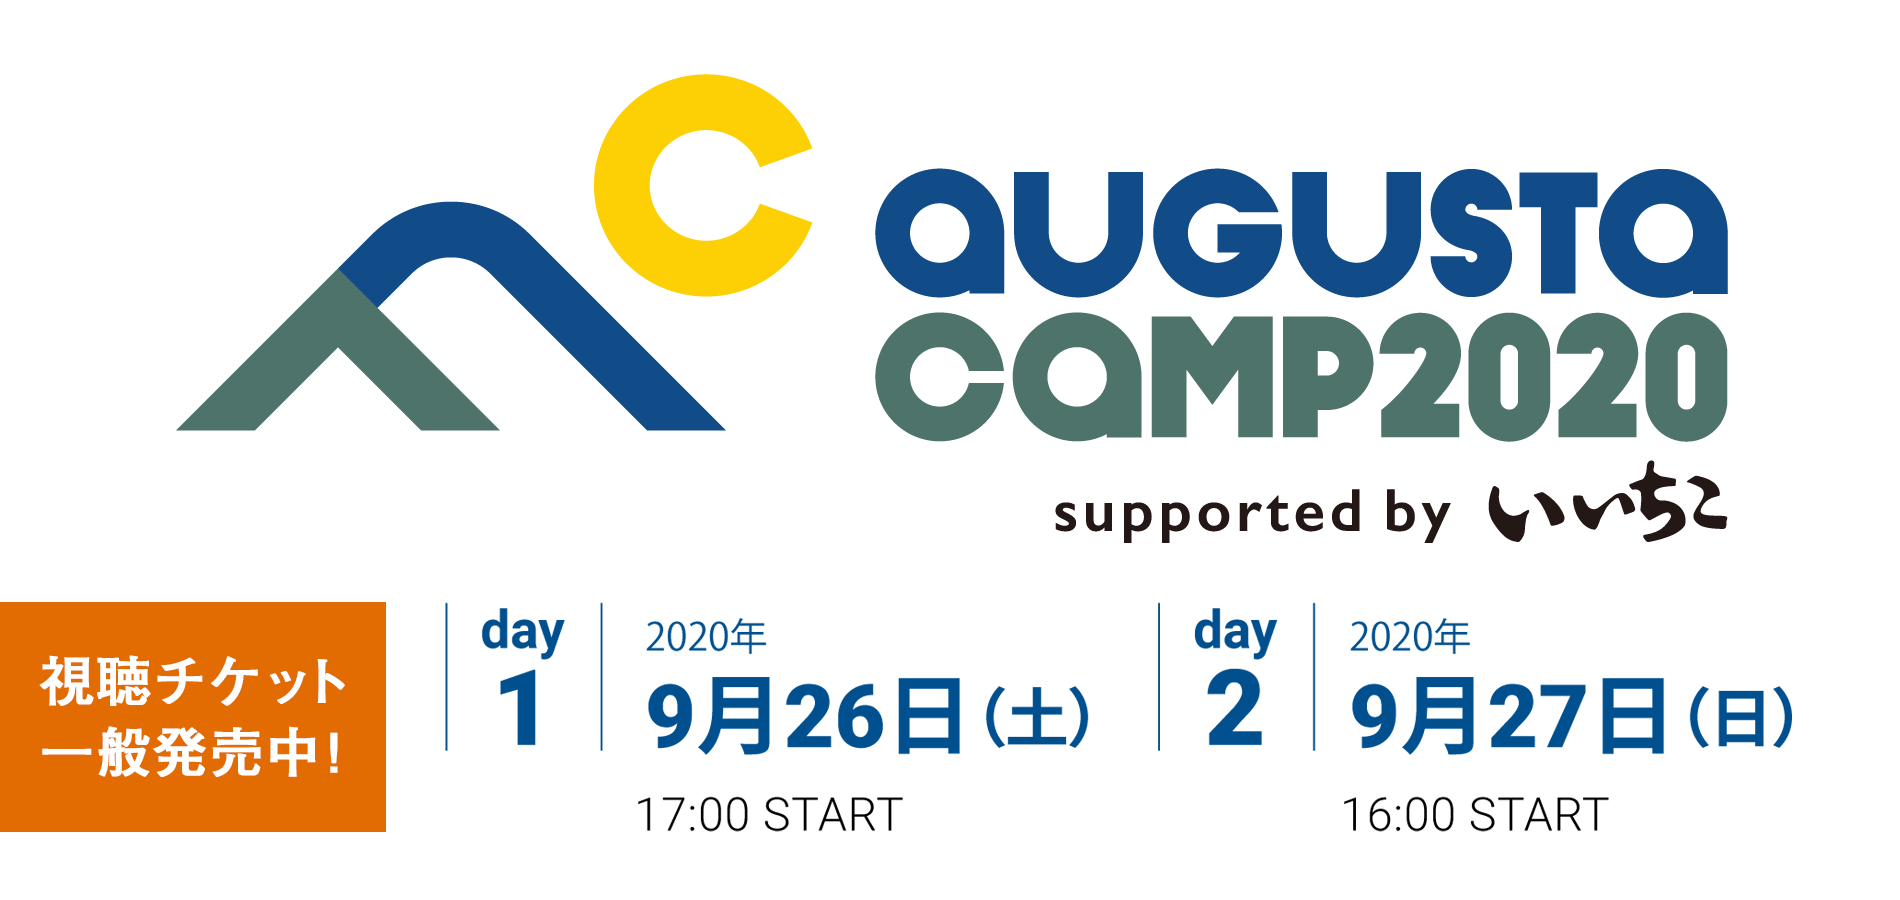 Augusta Camp 2020 2020年 9月26日（土）・27日（日）